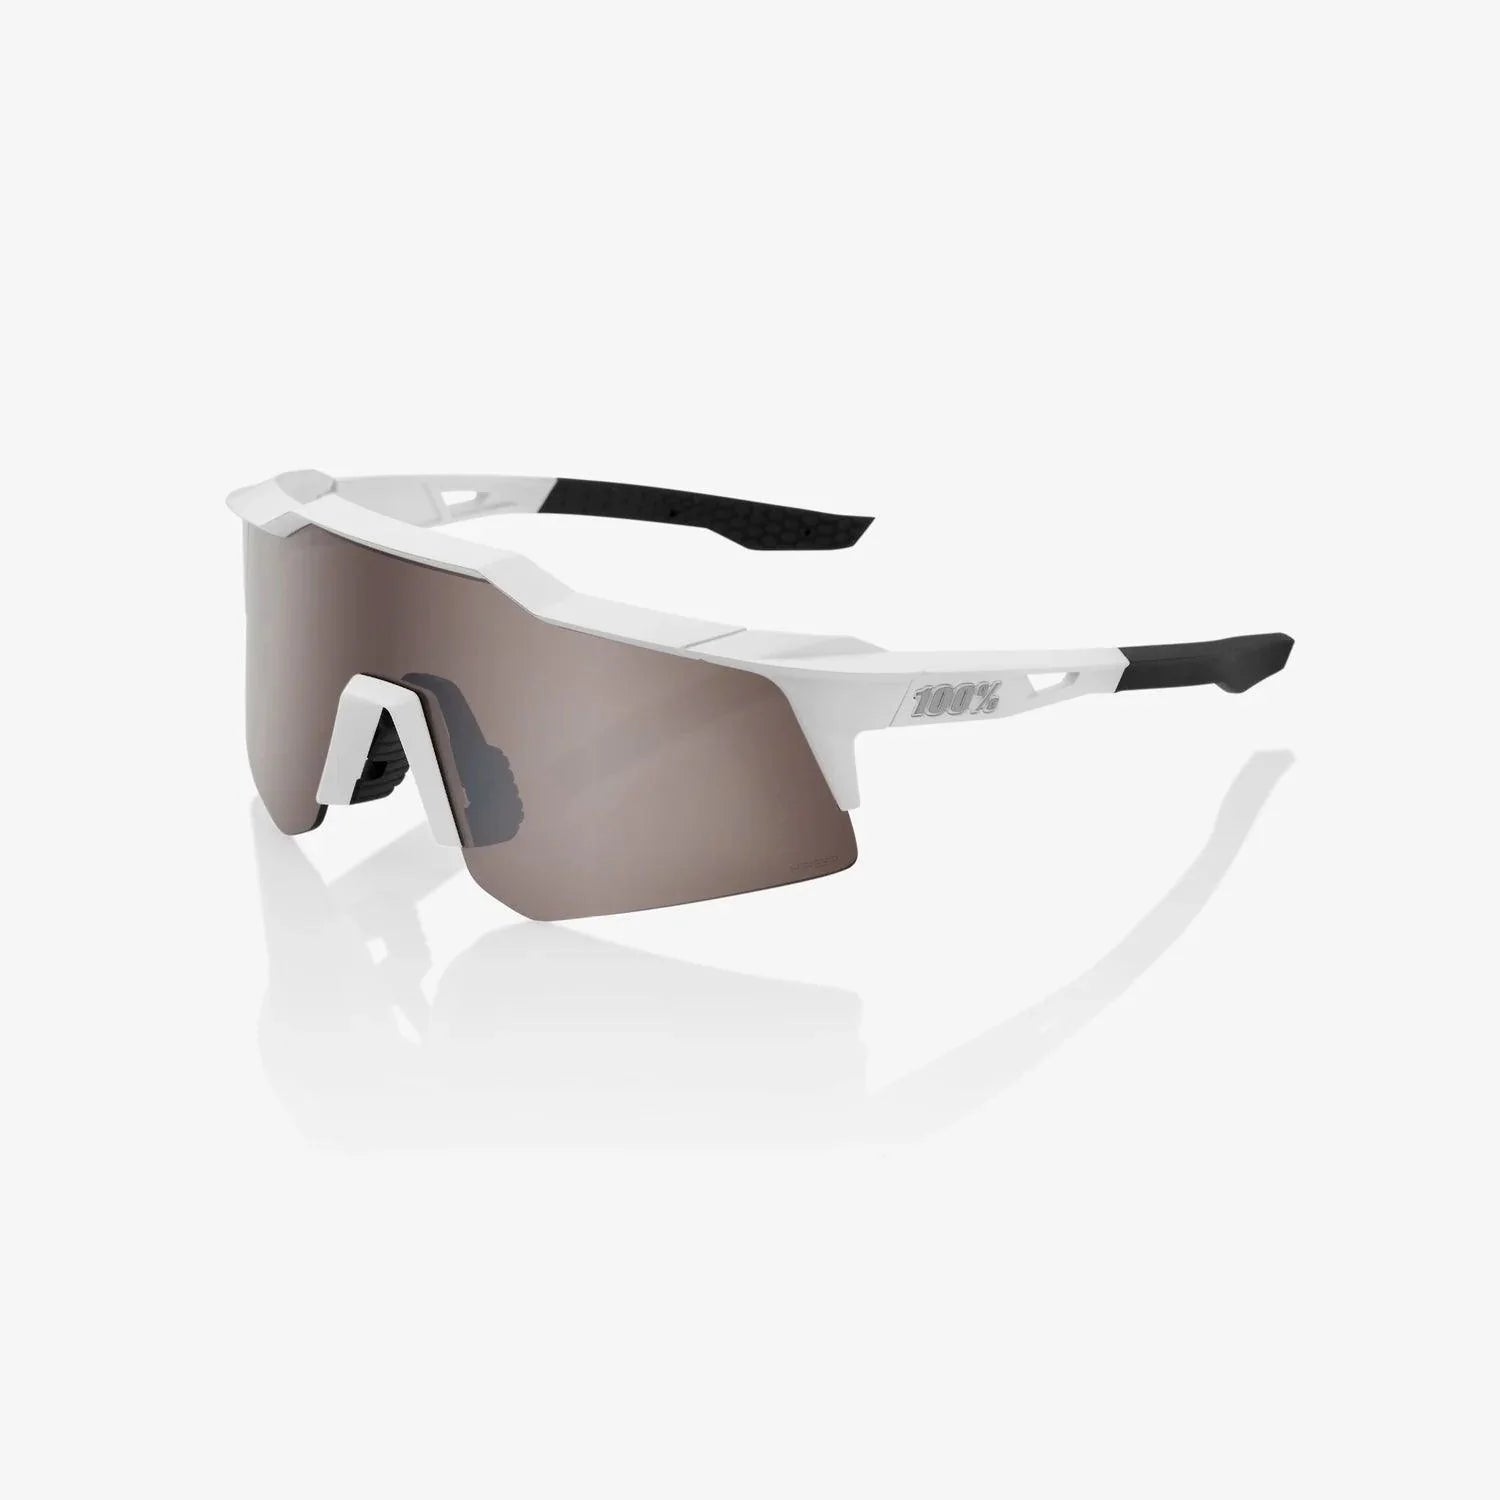 100 Percent Sunglasses - SPEEDCRAFT XS - Matte White - HiPER Silver Mirror Lens - Smash It Sports